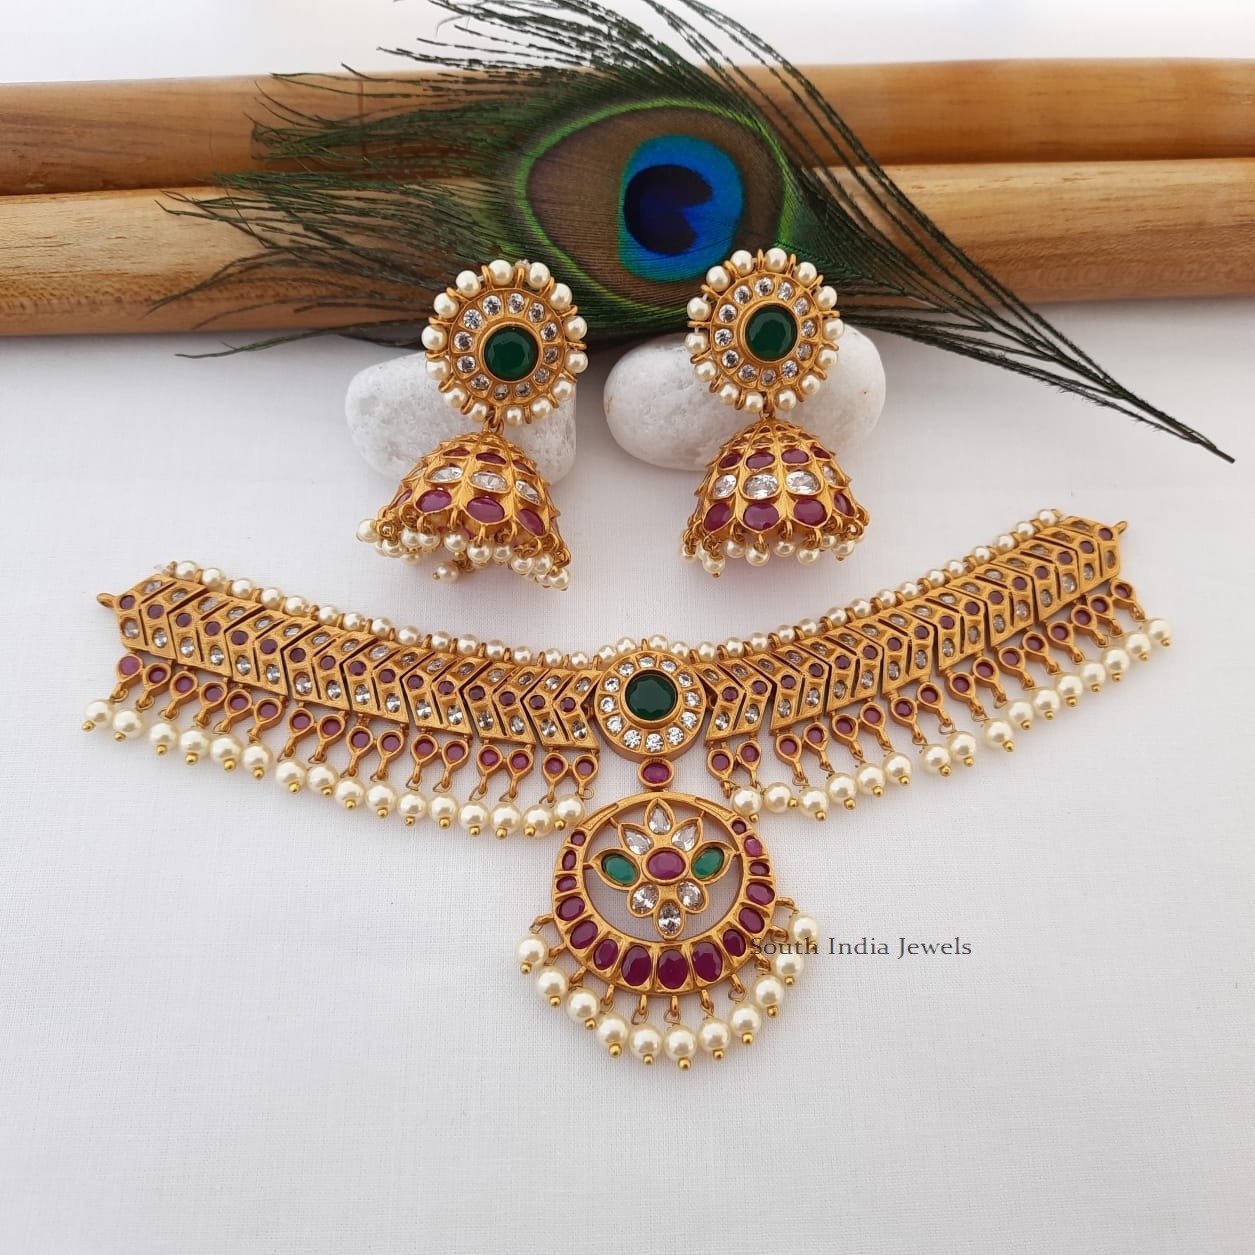 Gorgeous Multi Stone Choker - South India Jewels